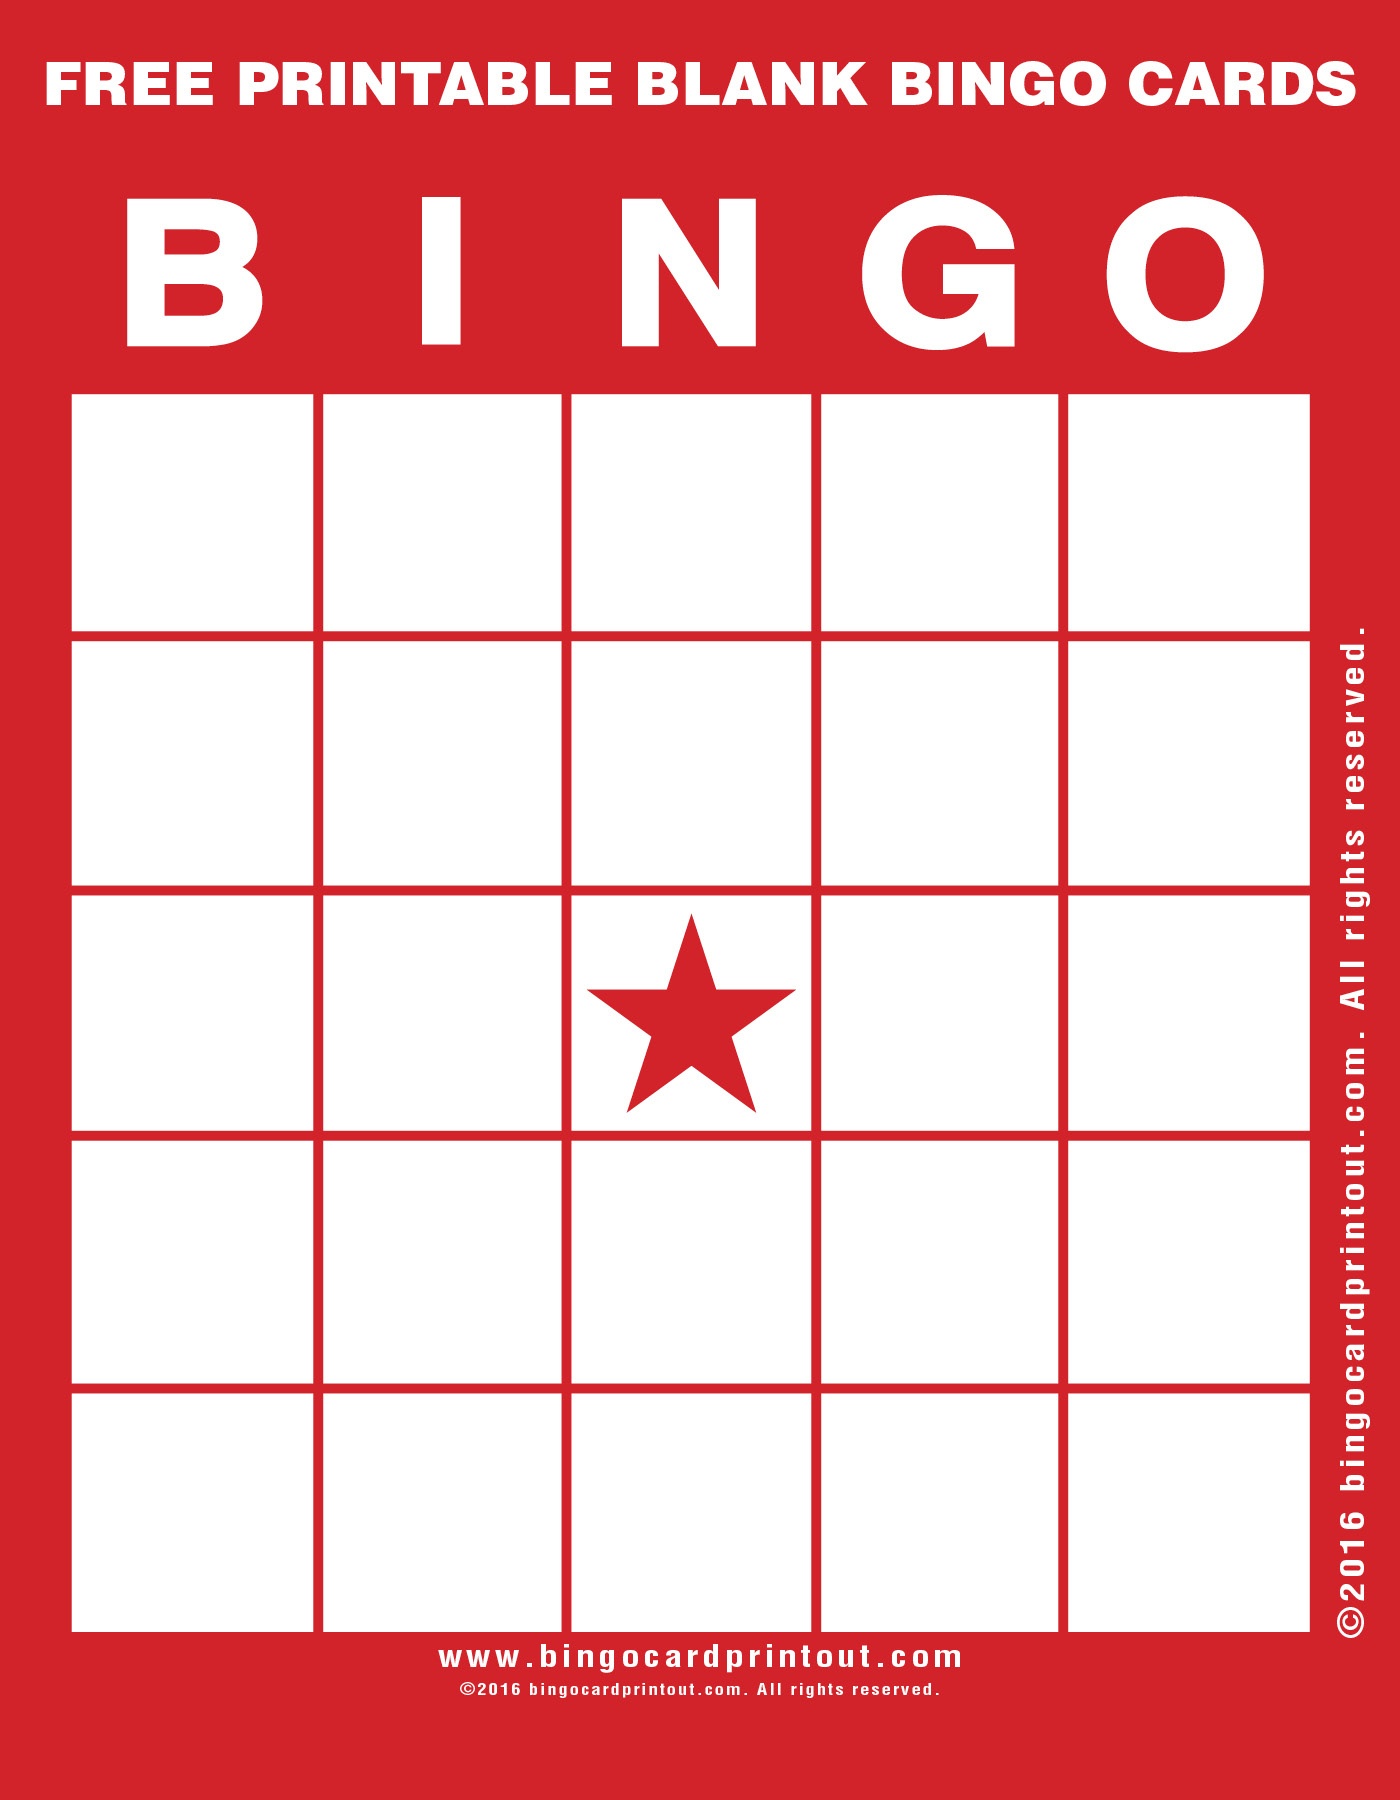 Free Printable Blank Bingo Cards - Bingocardprintout - Free Printable Bingo Cards